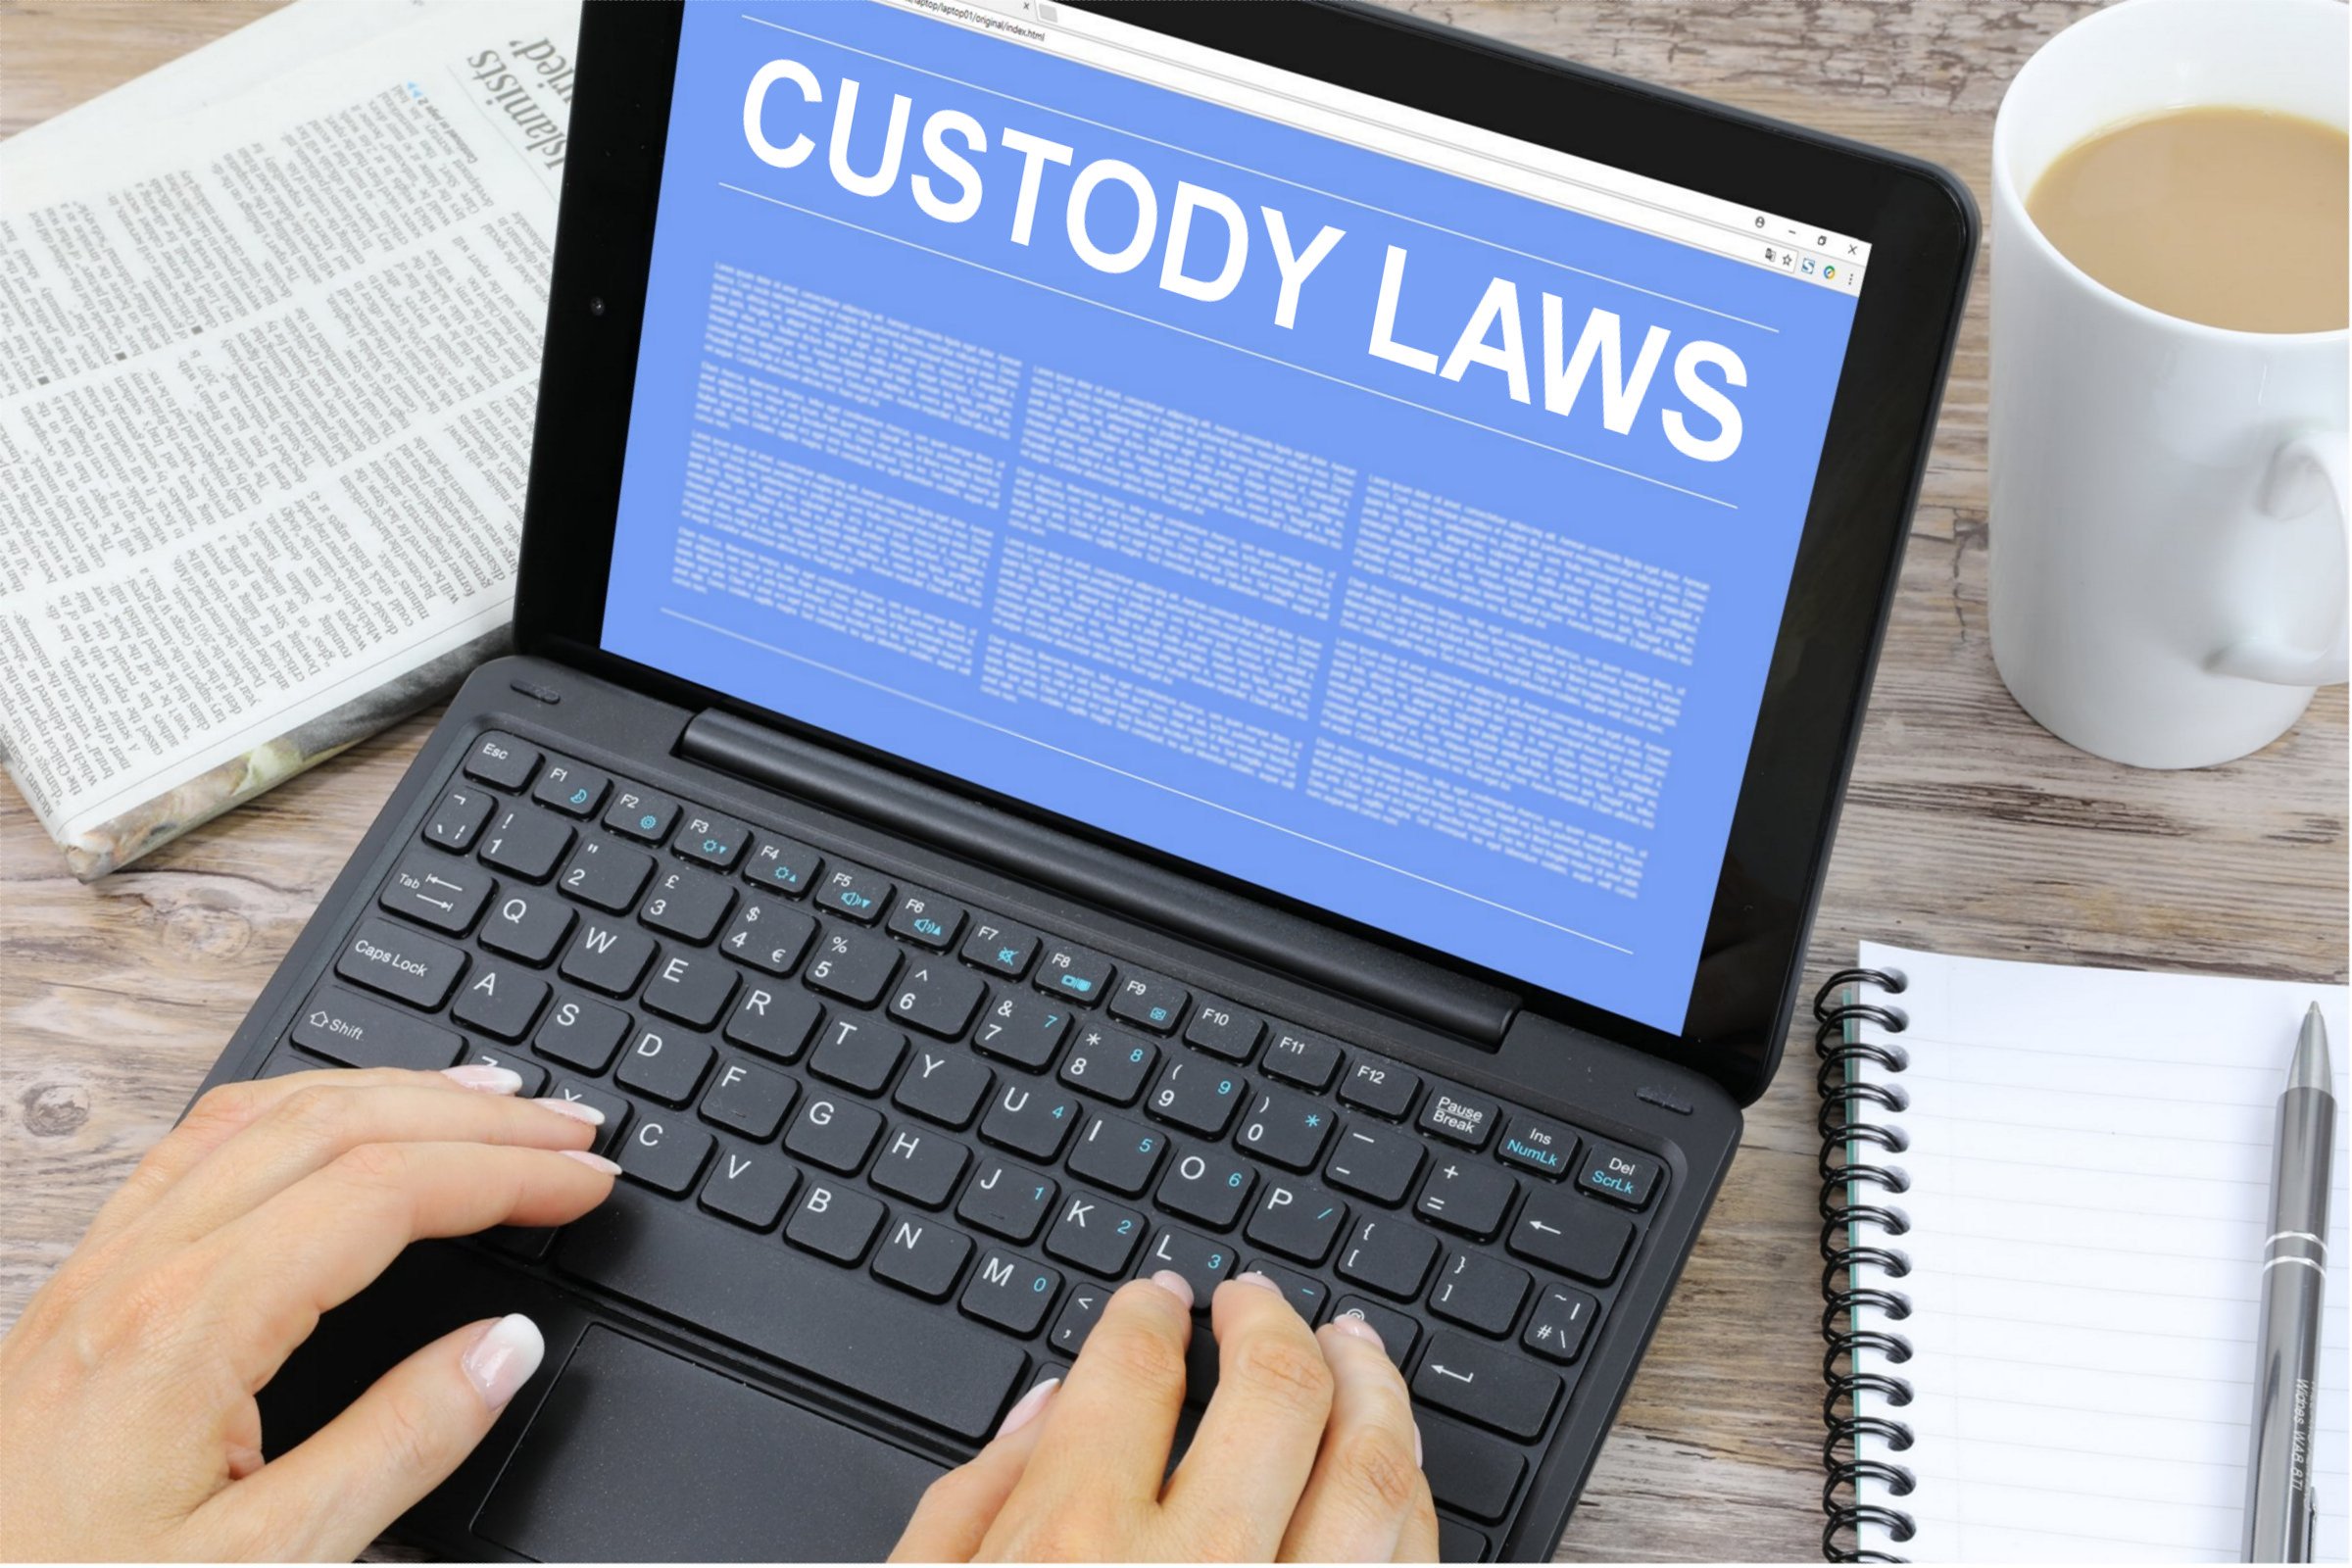 Custody Laws